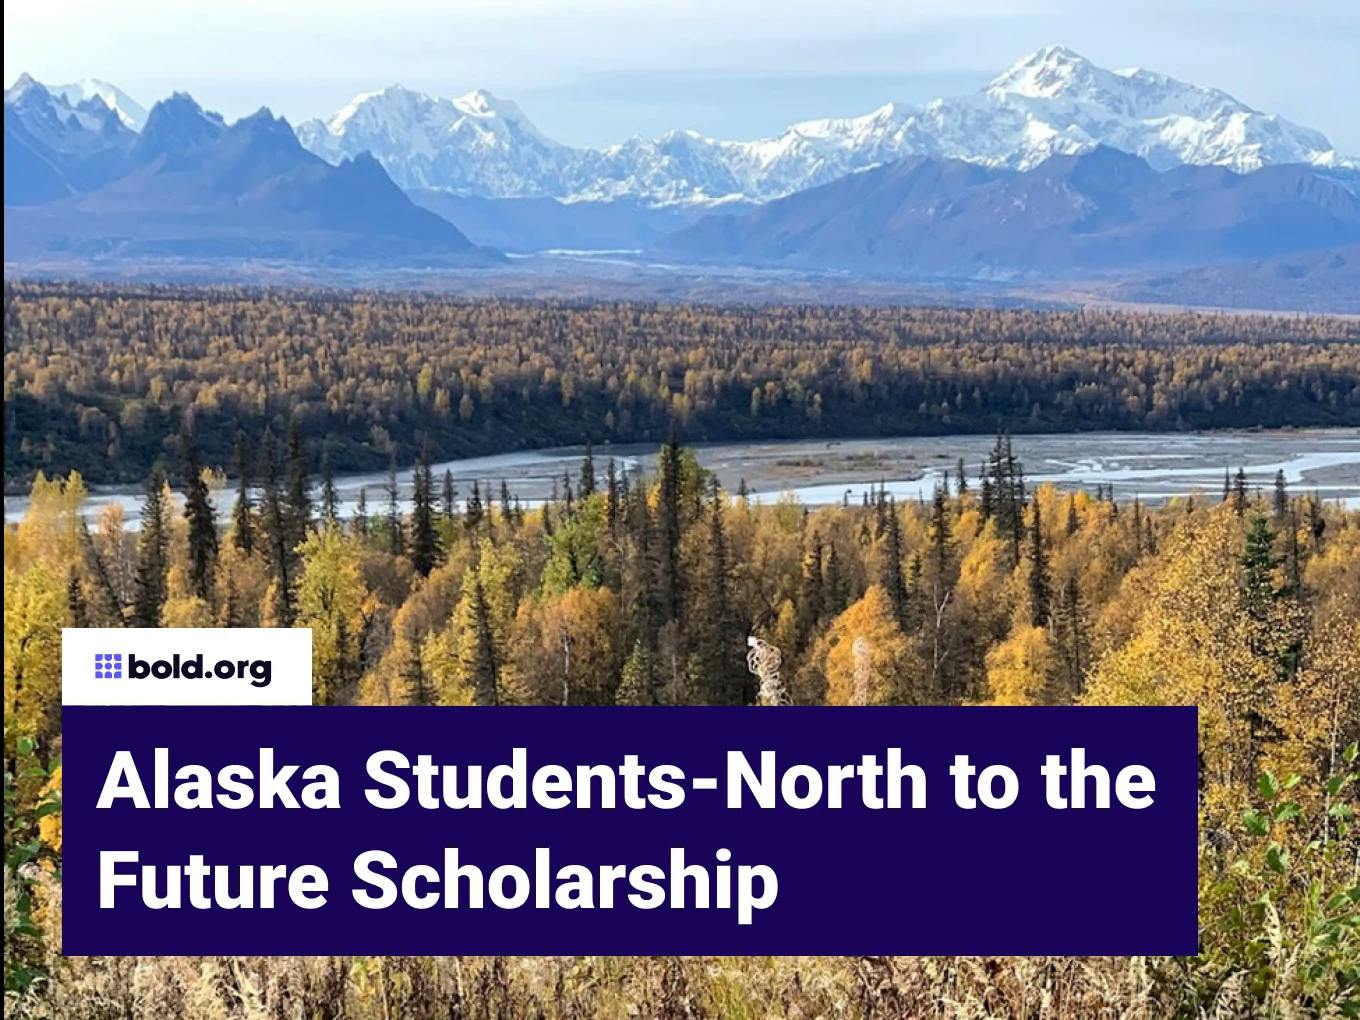 Alaska Students - North to the Future Scholarship